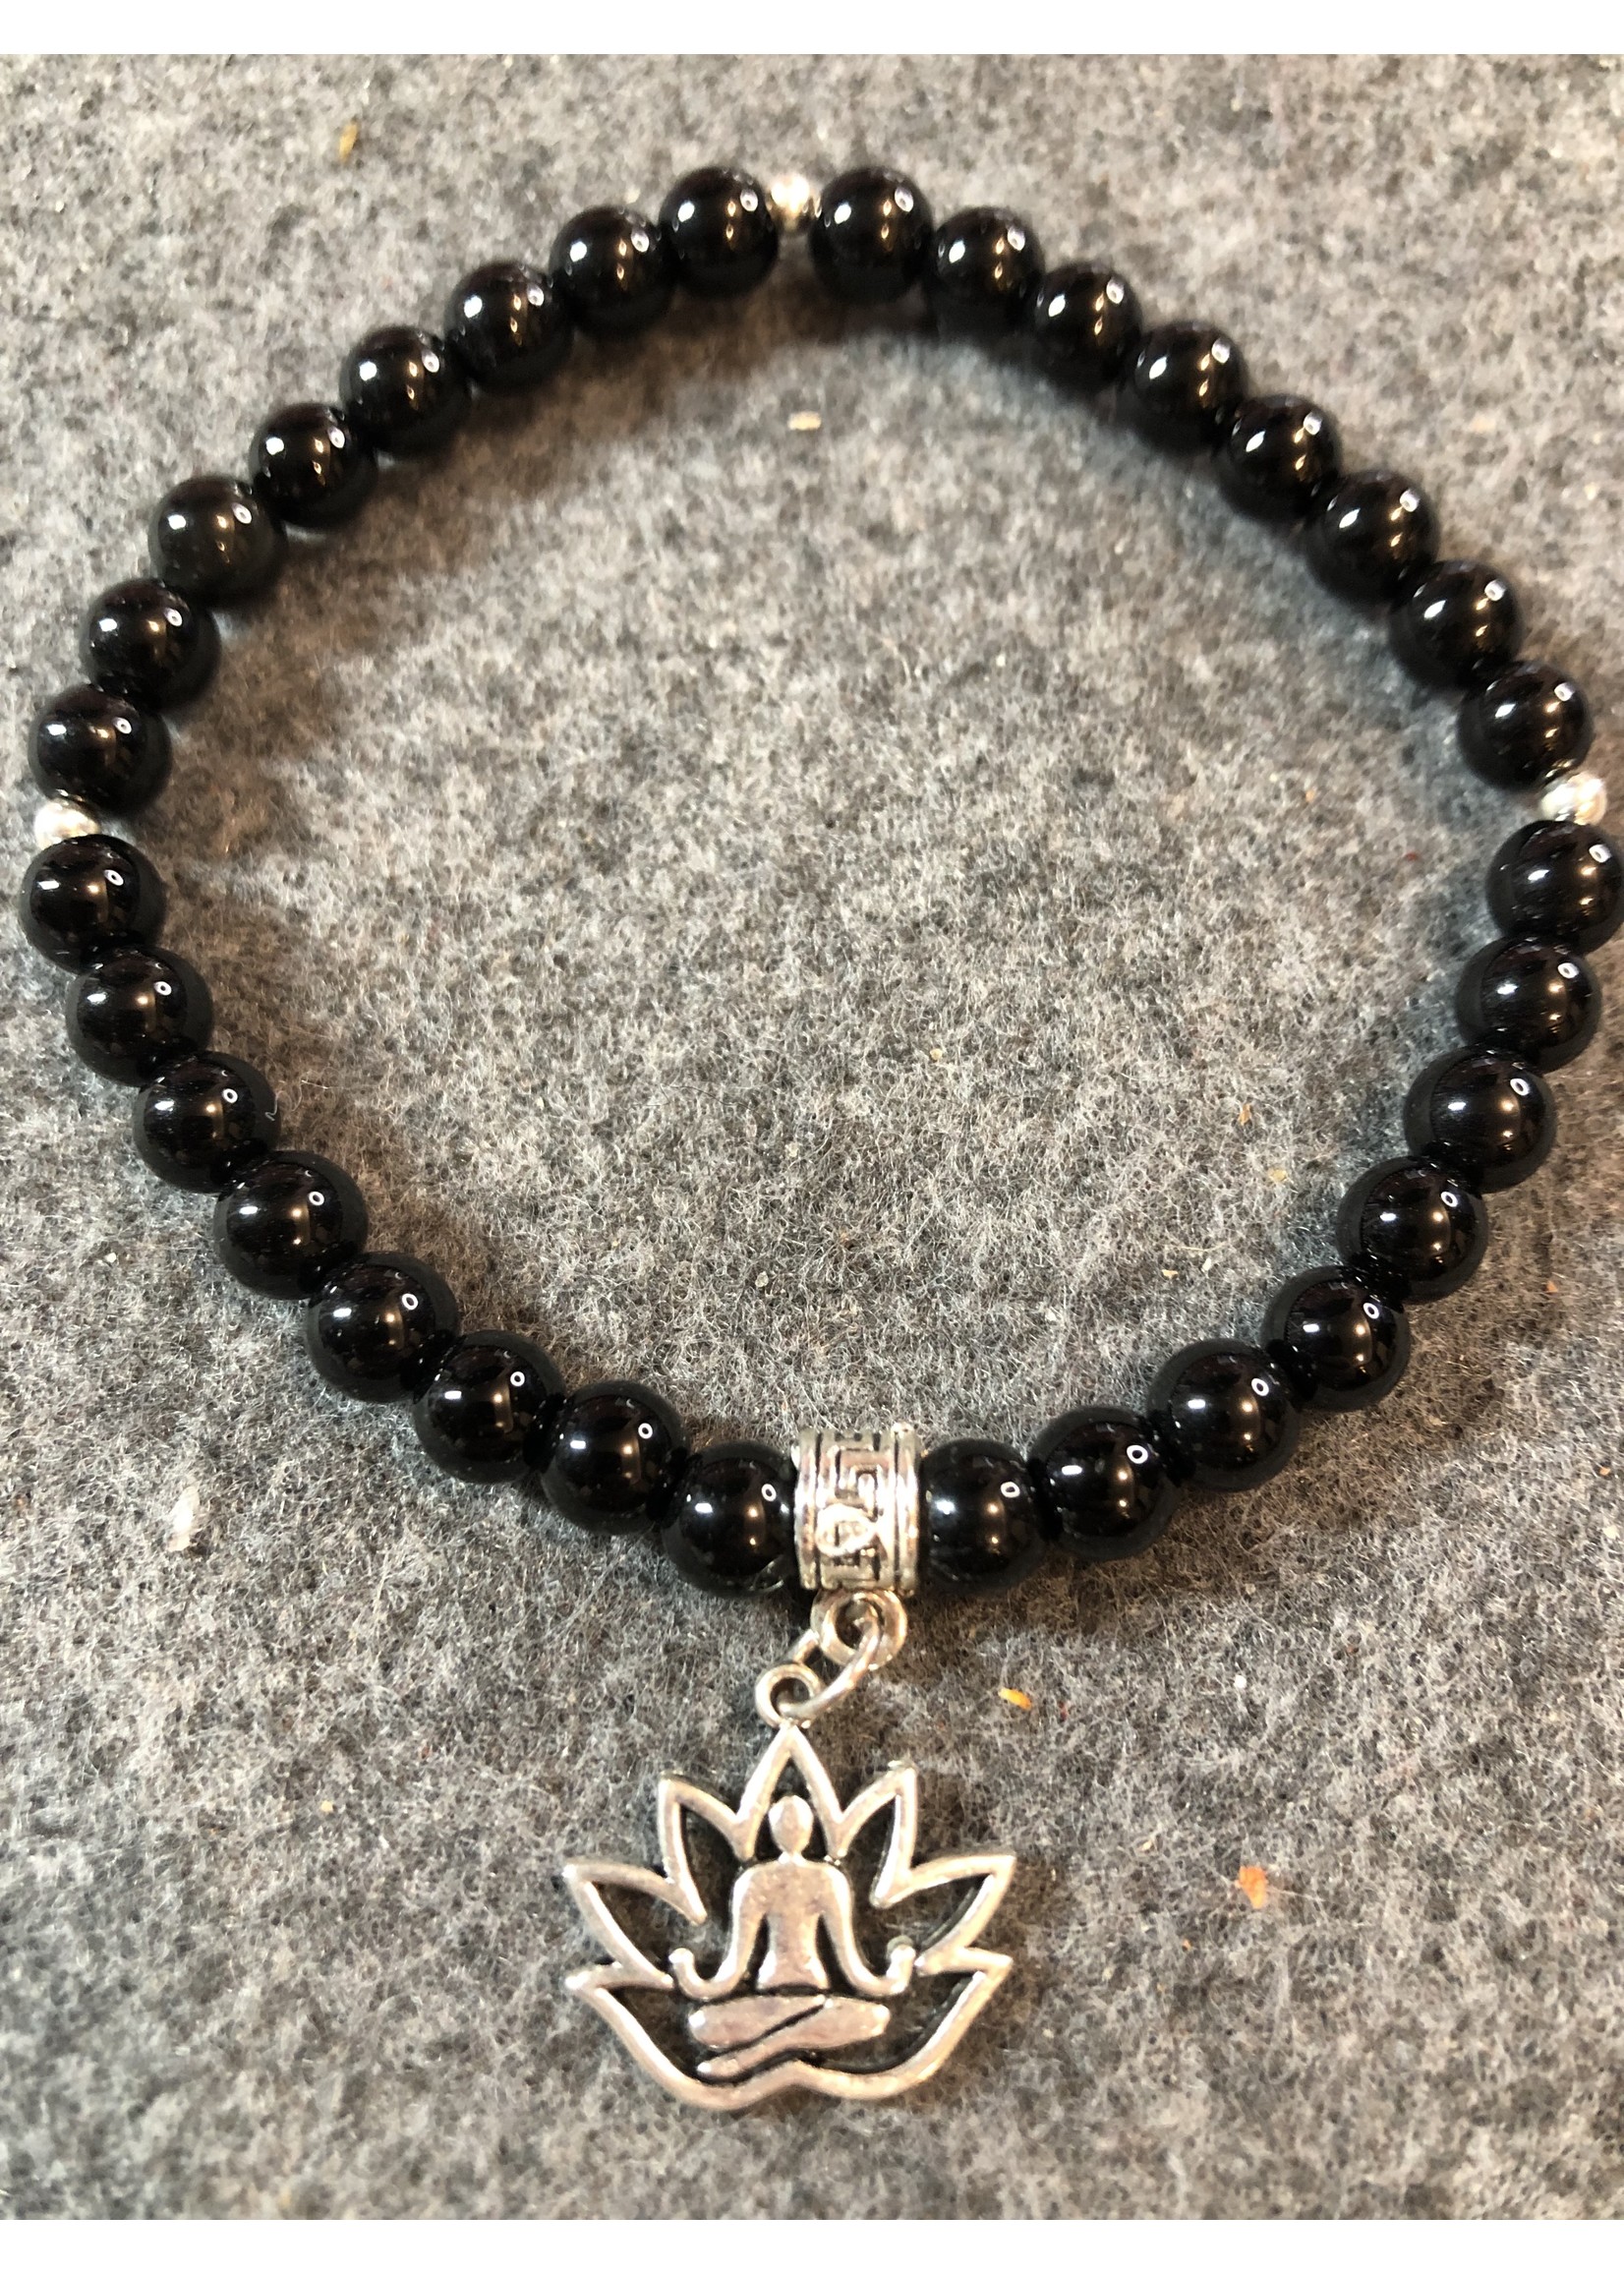 Onyx Gemstone Bracelet w/ Lotus / Yoga Charm - 6mm - Root Chakra